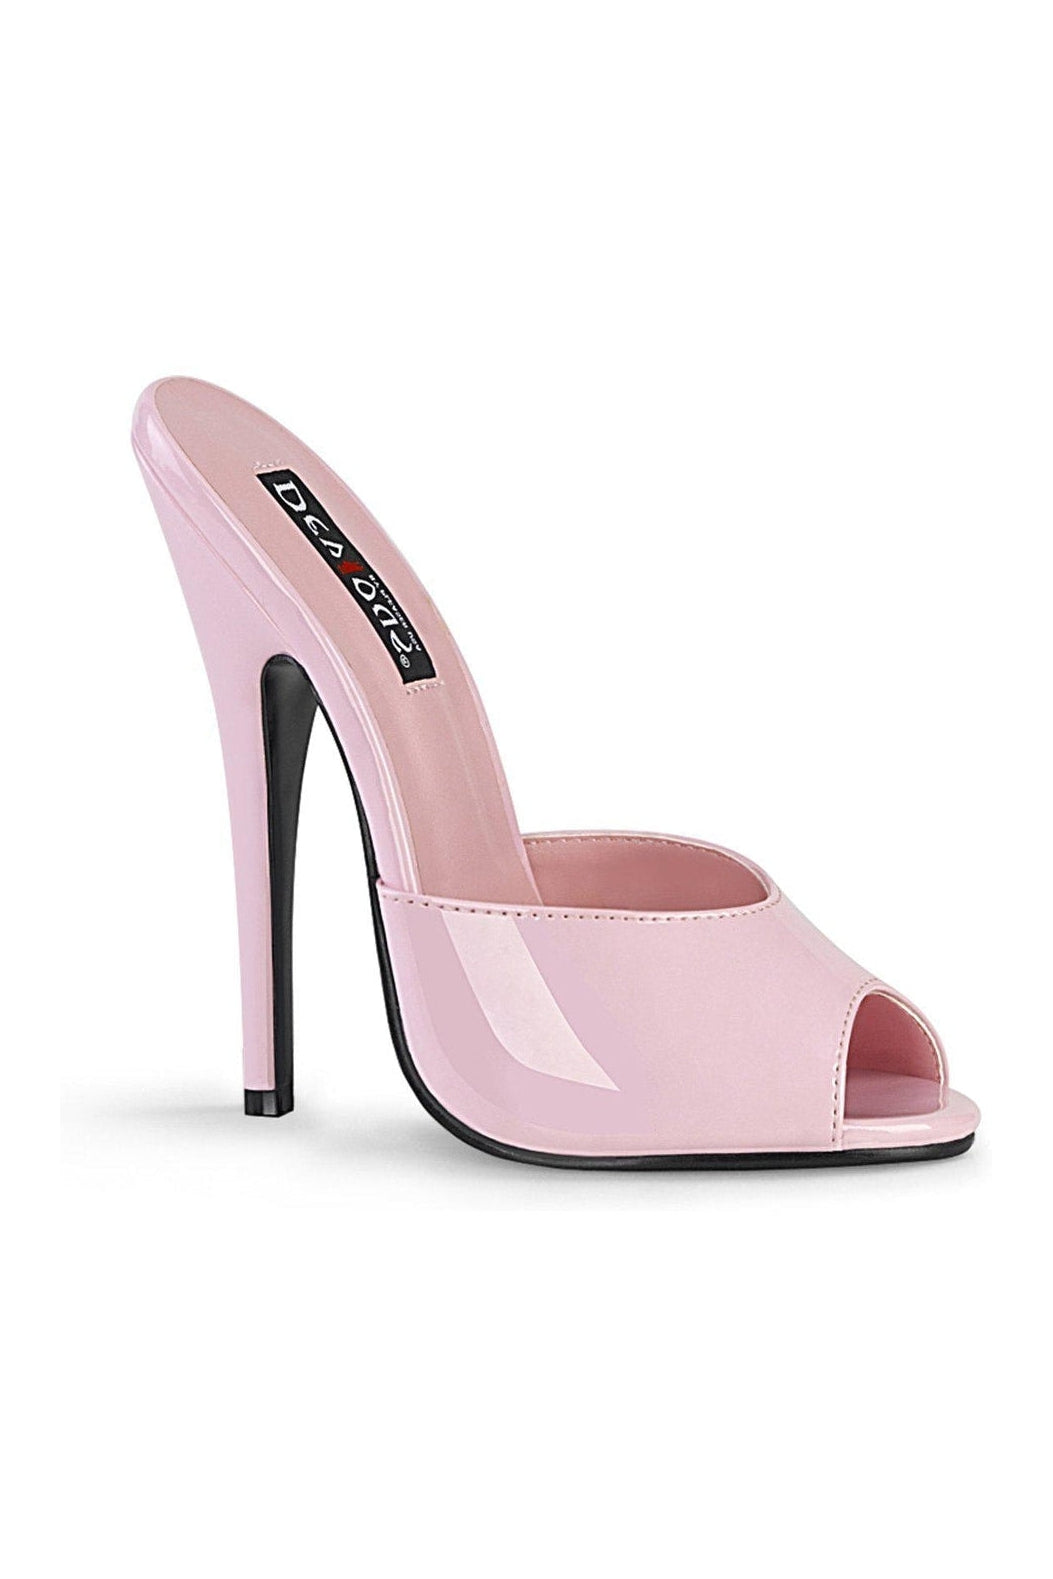 DOMINA-101 Slide | Pink Patent-Slides- Stripper Shoes at SEXYSHOES.COM